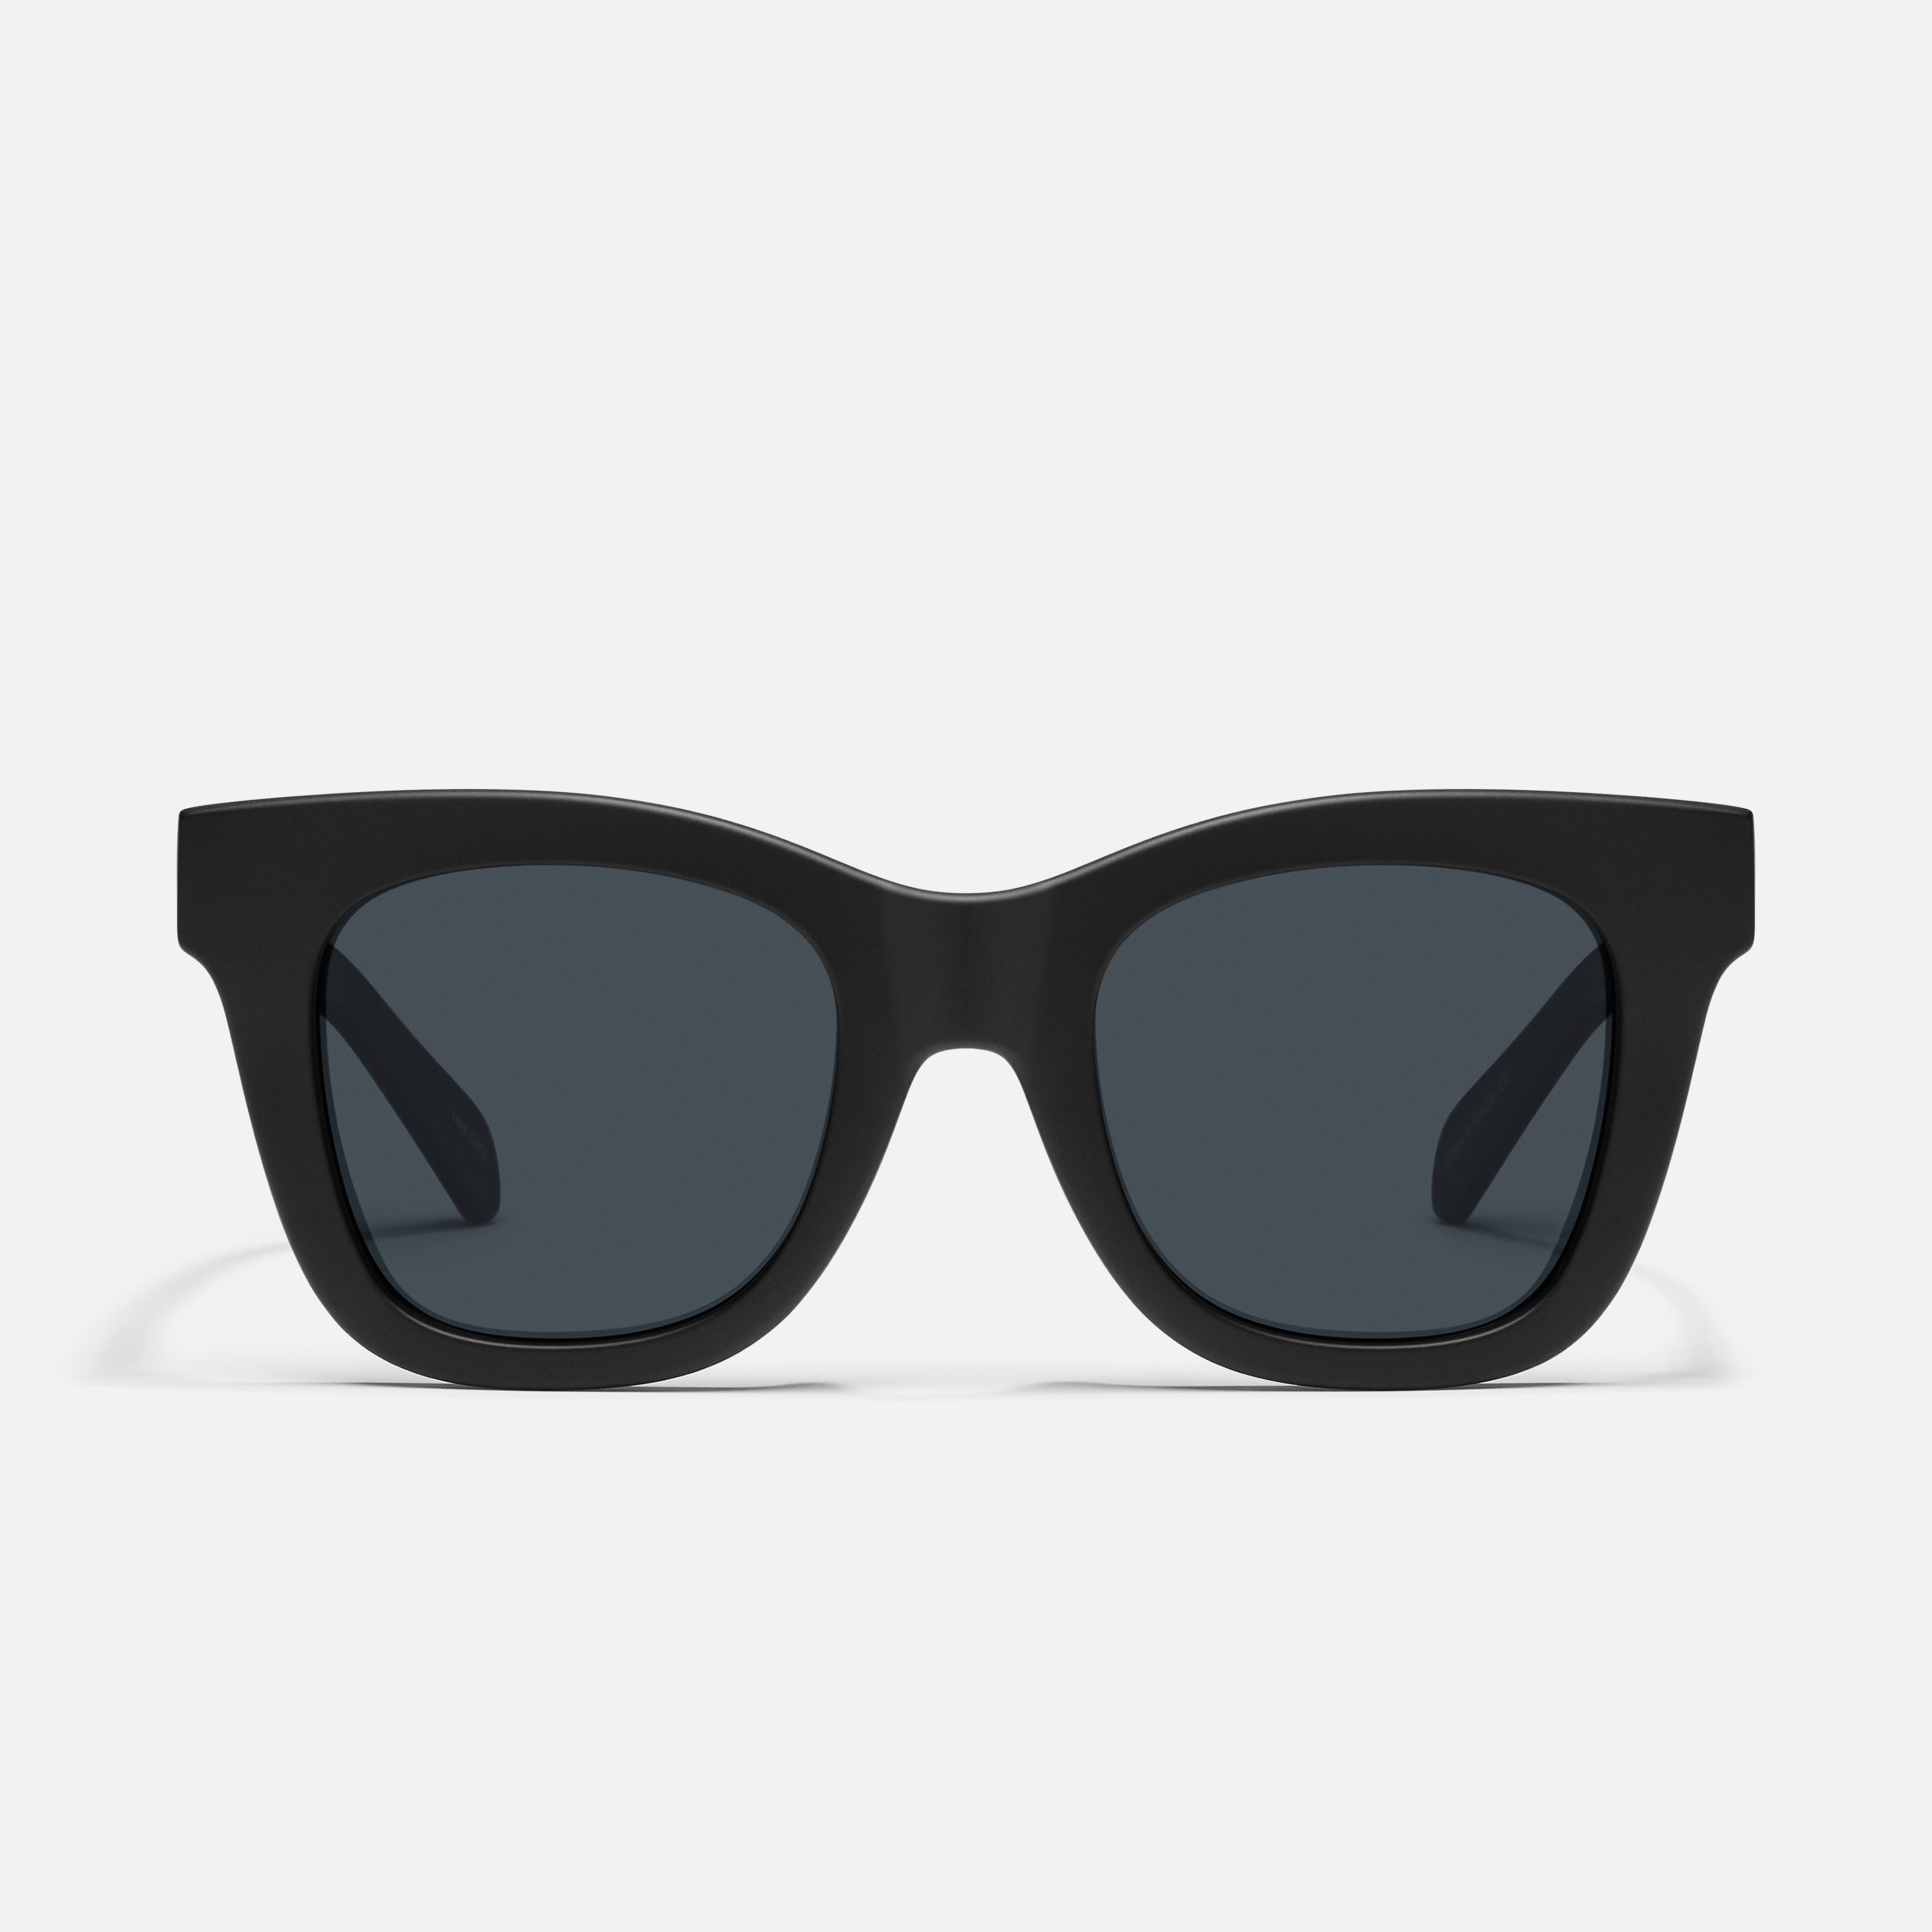 All Men's and Women's Sunglasses – Quay